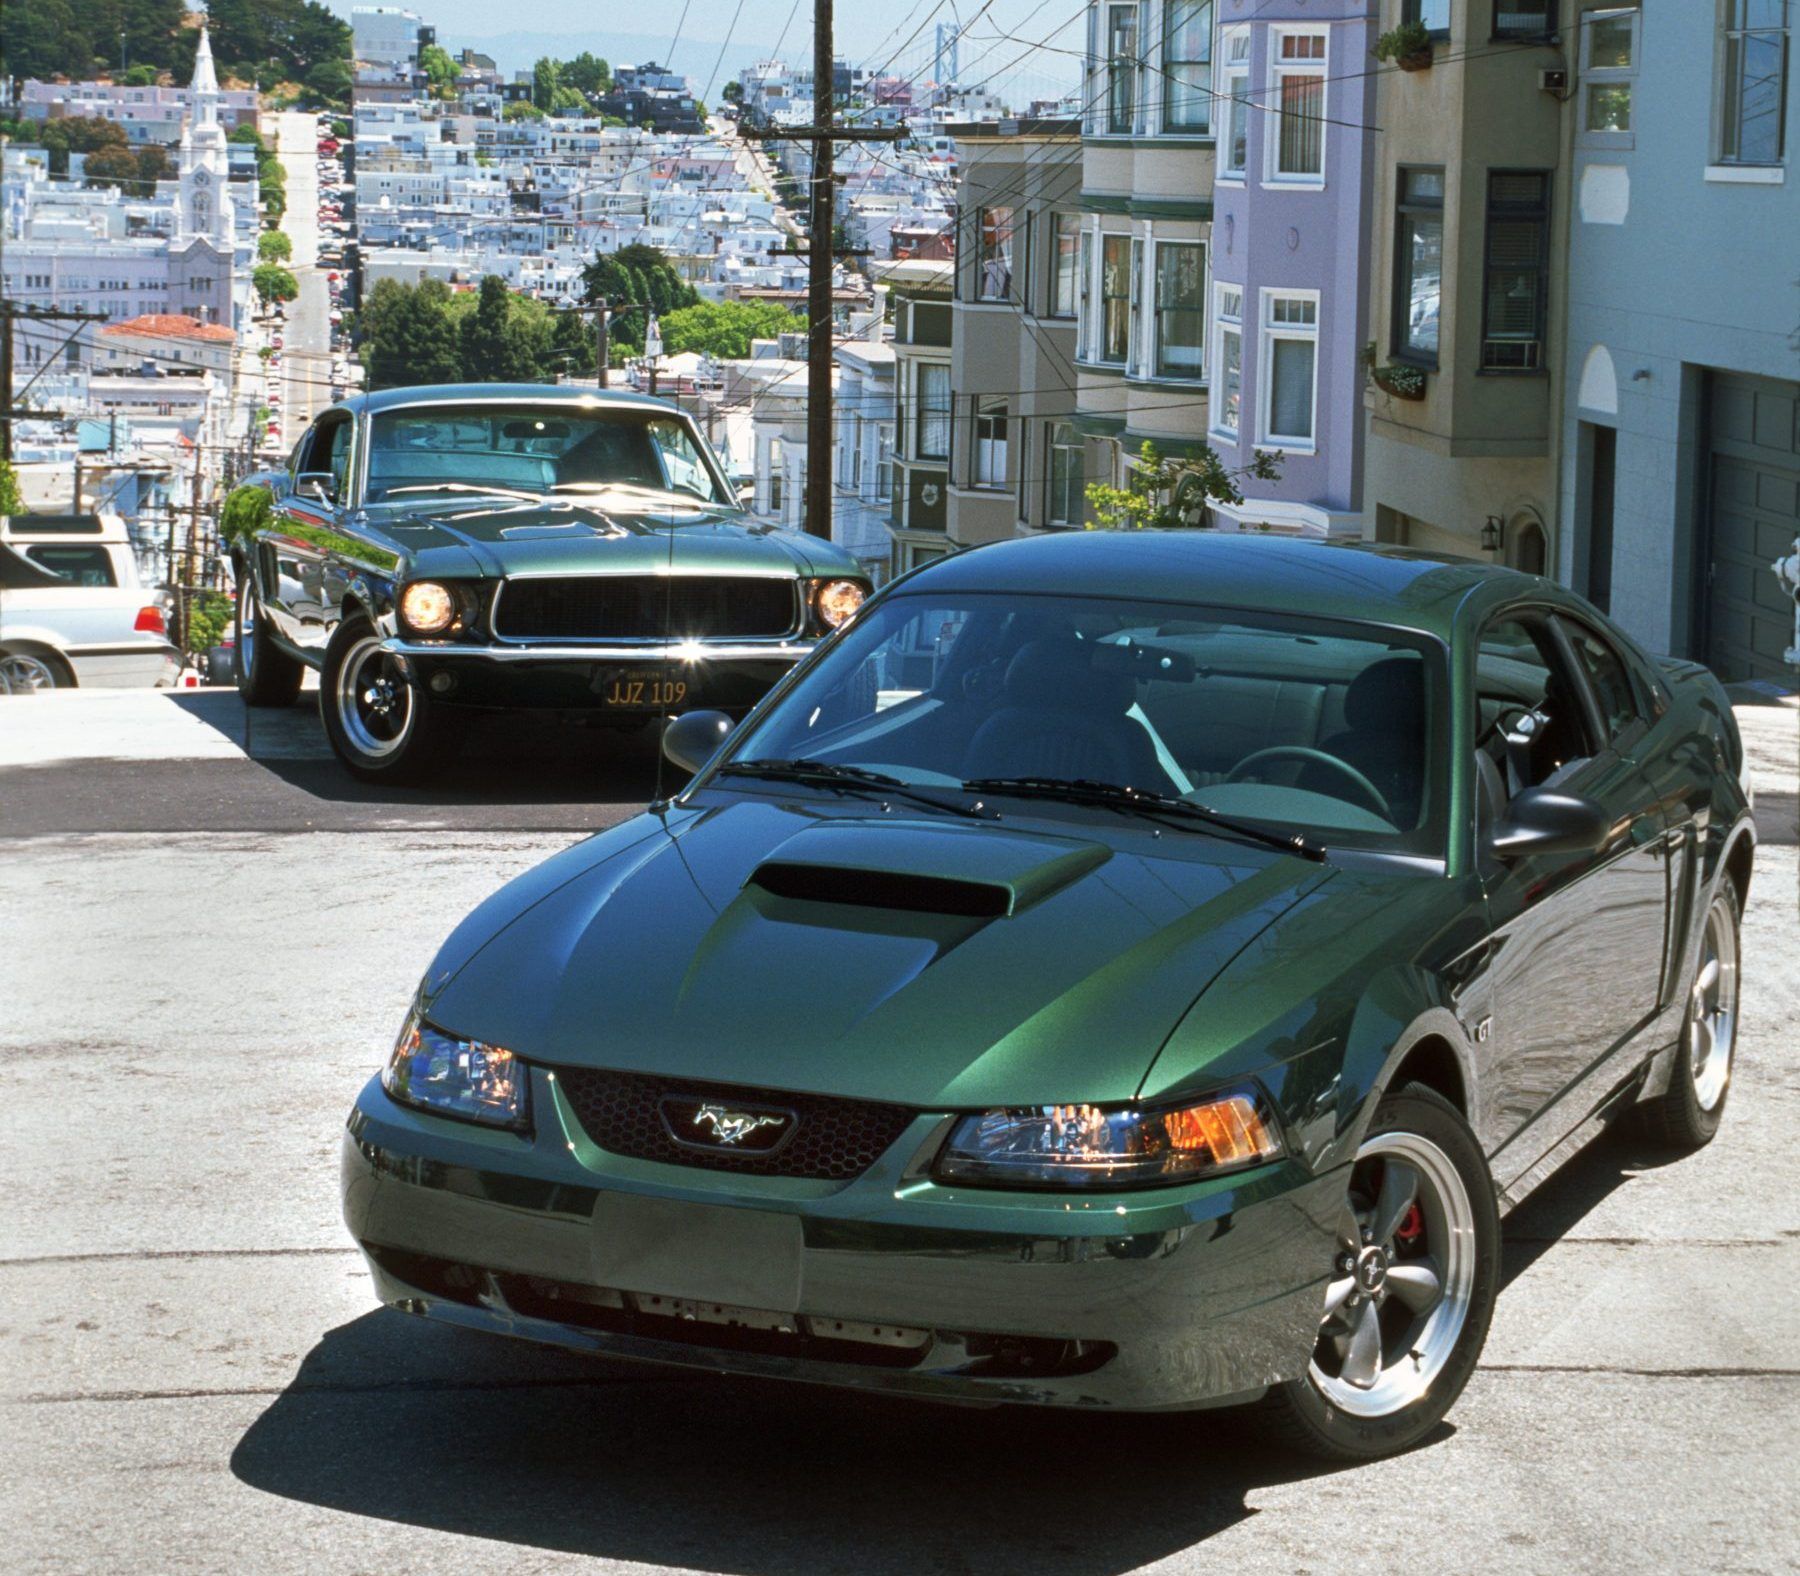 2001 Bullitt Mustang in a photoshoot with the original Bullitt car on San Francisco streets